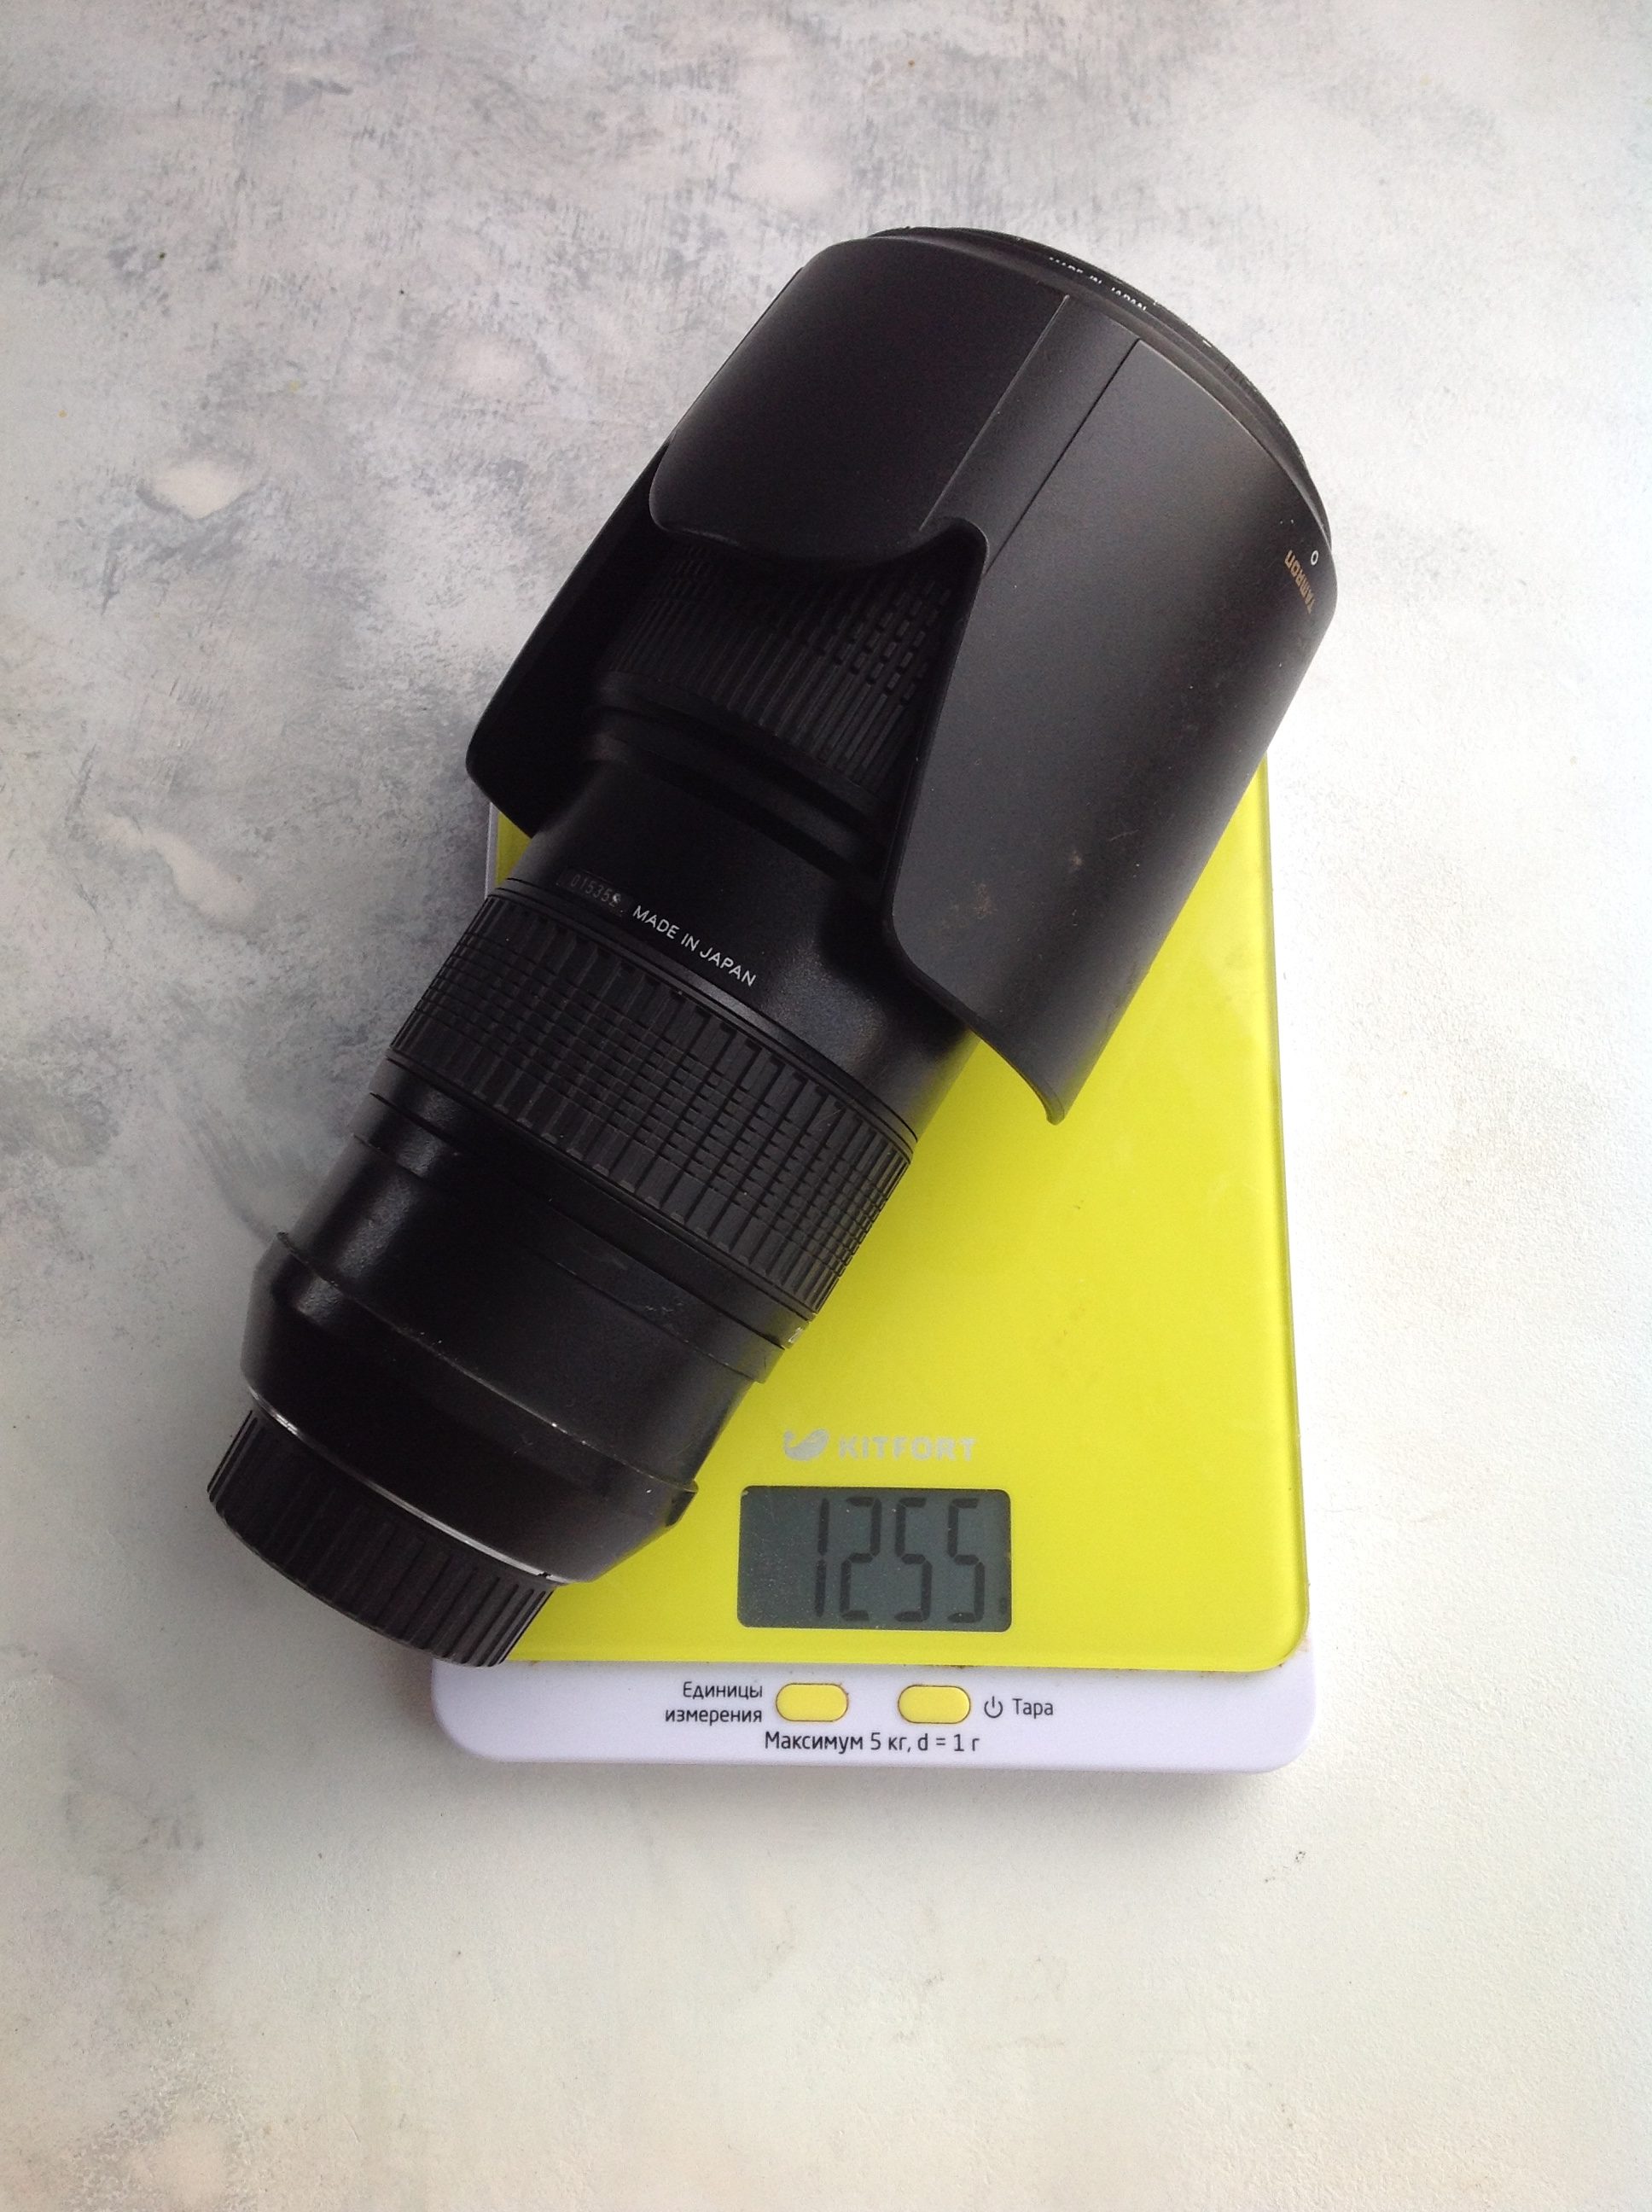 weight of a tamron 70-200 2.8 lens